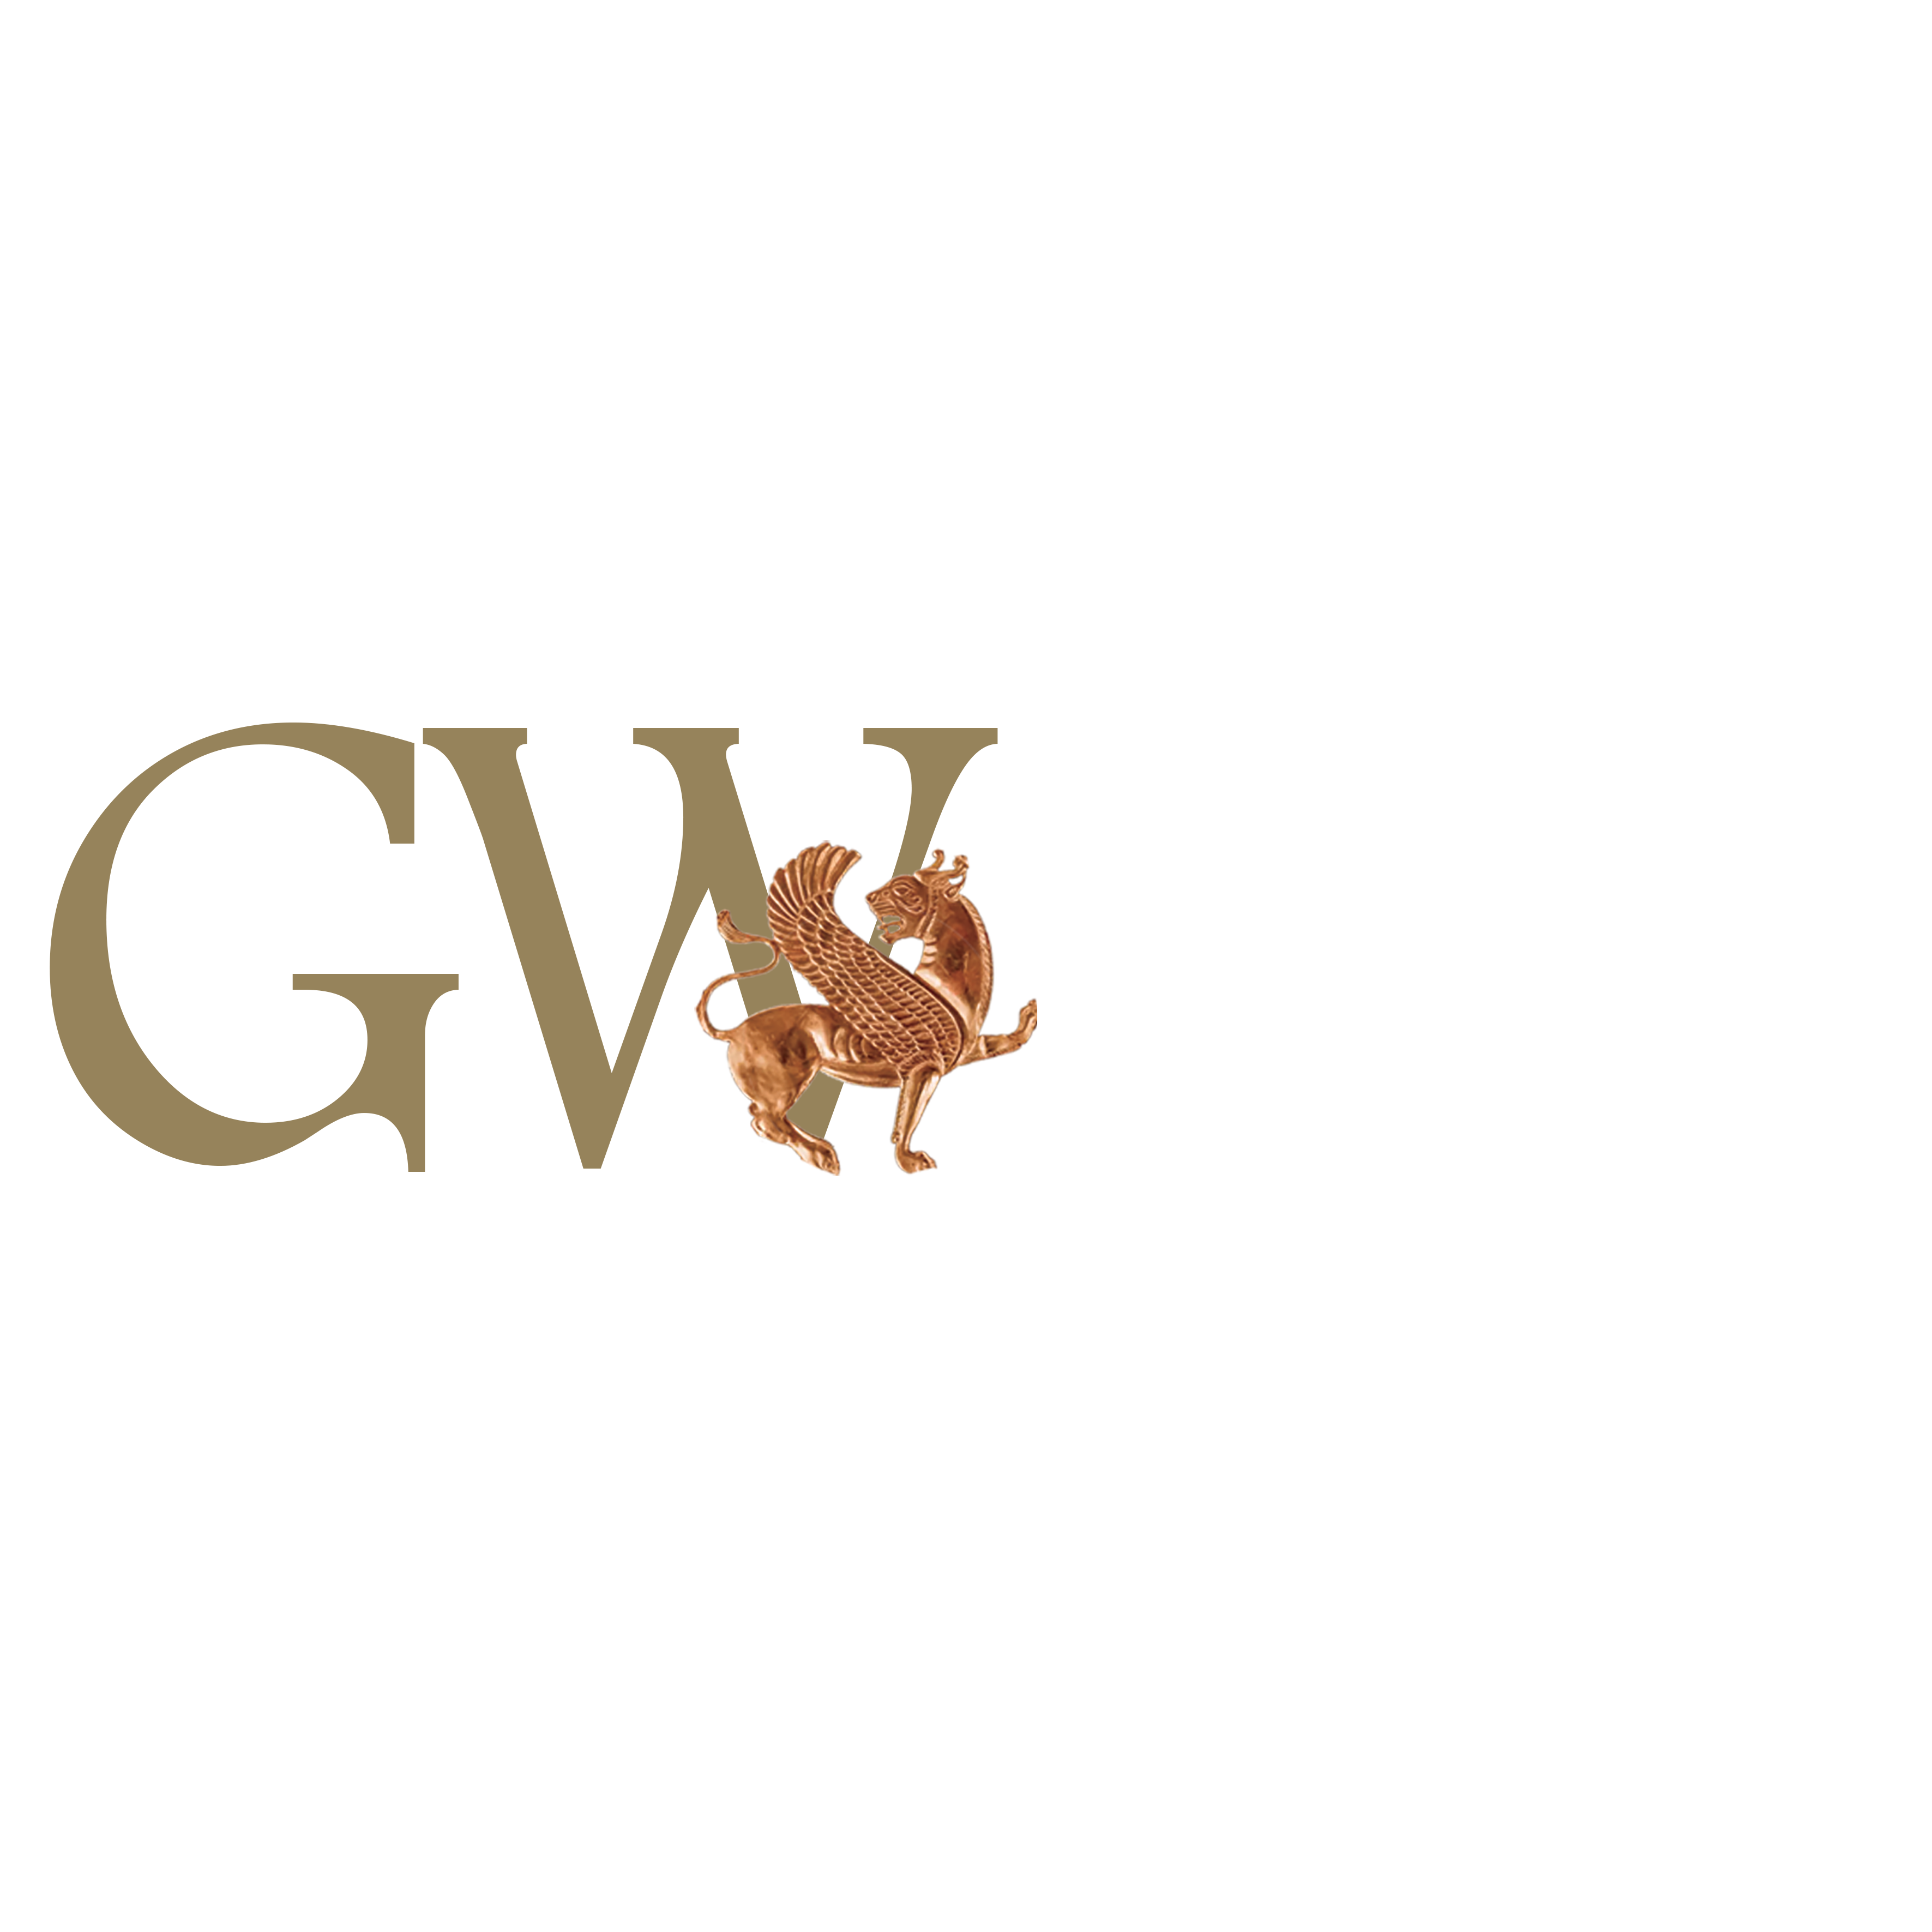 Iranian Student Association at George Washington University